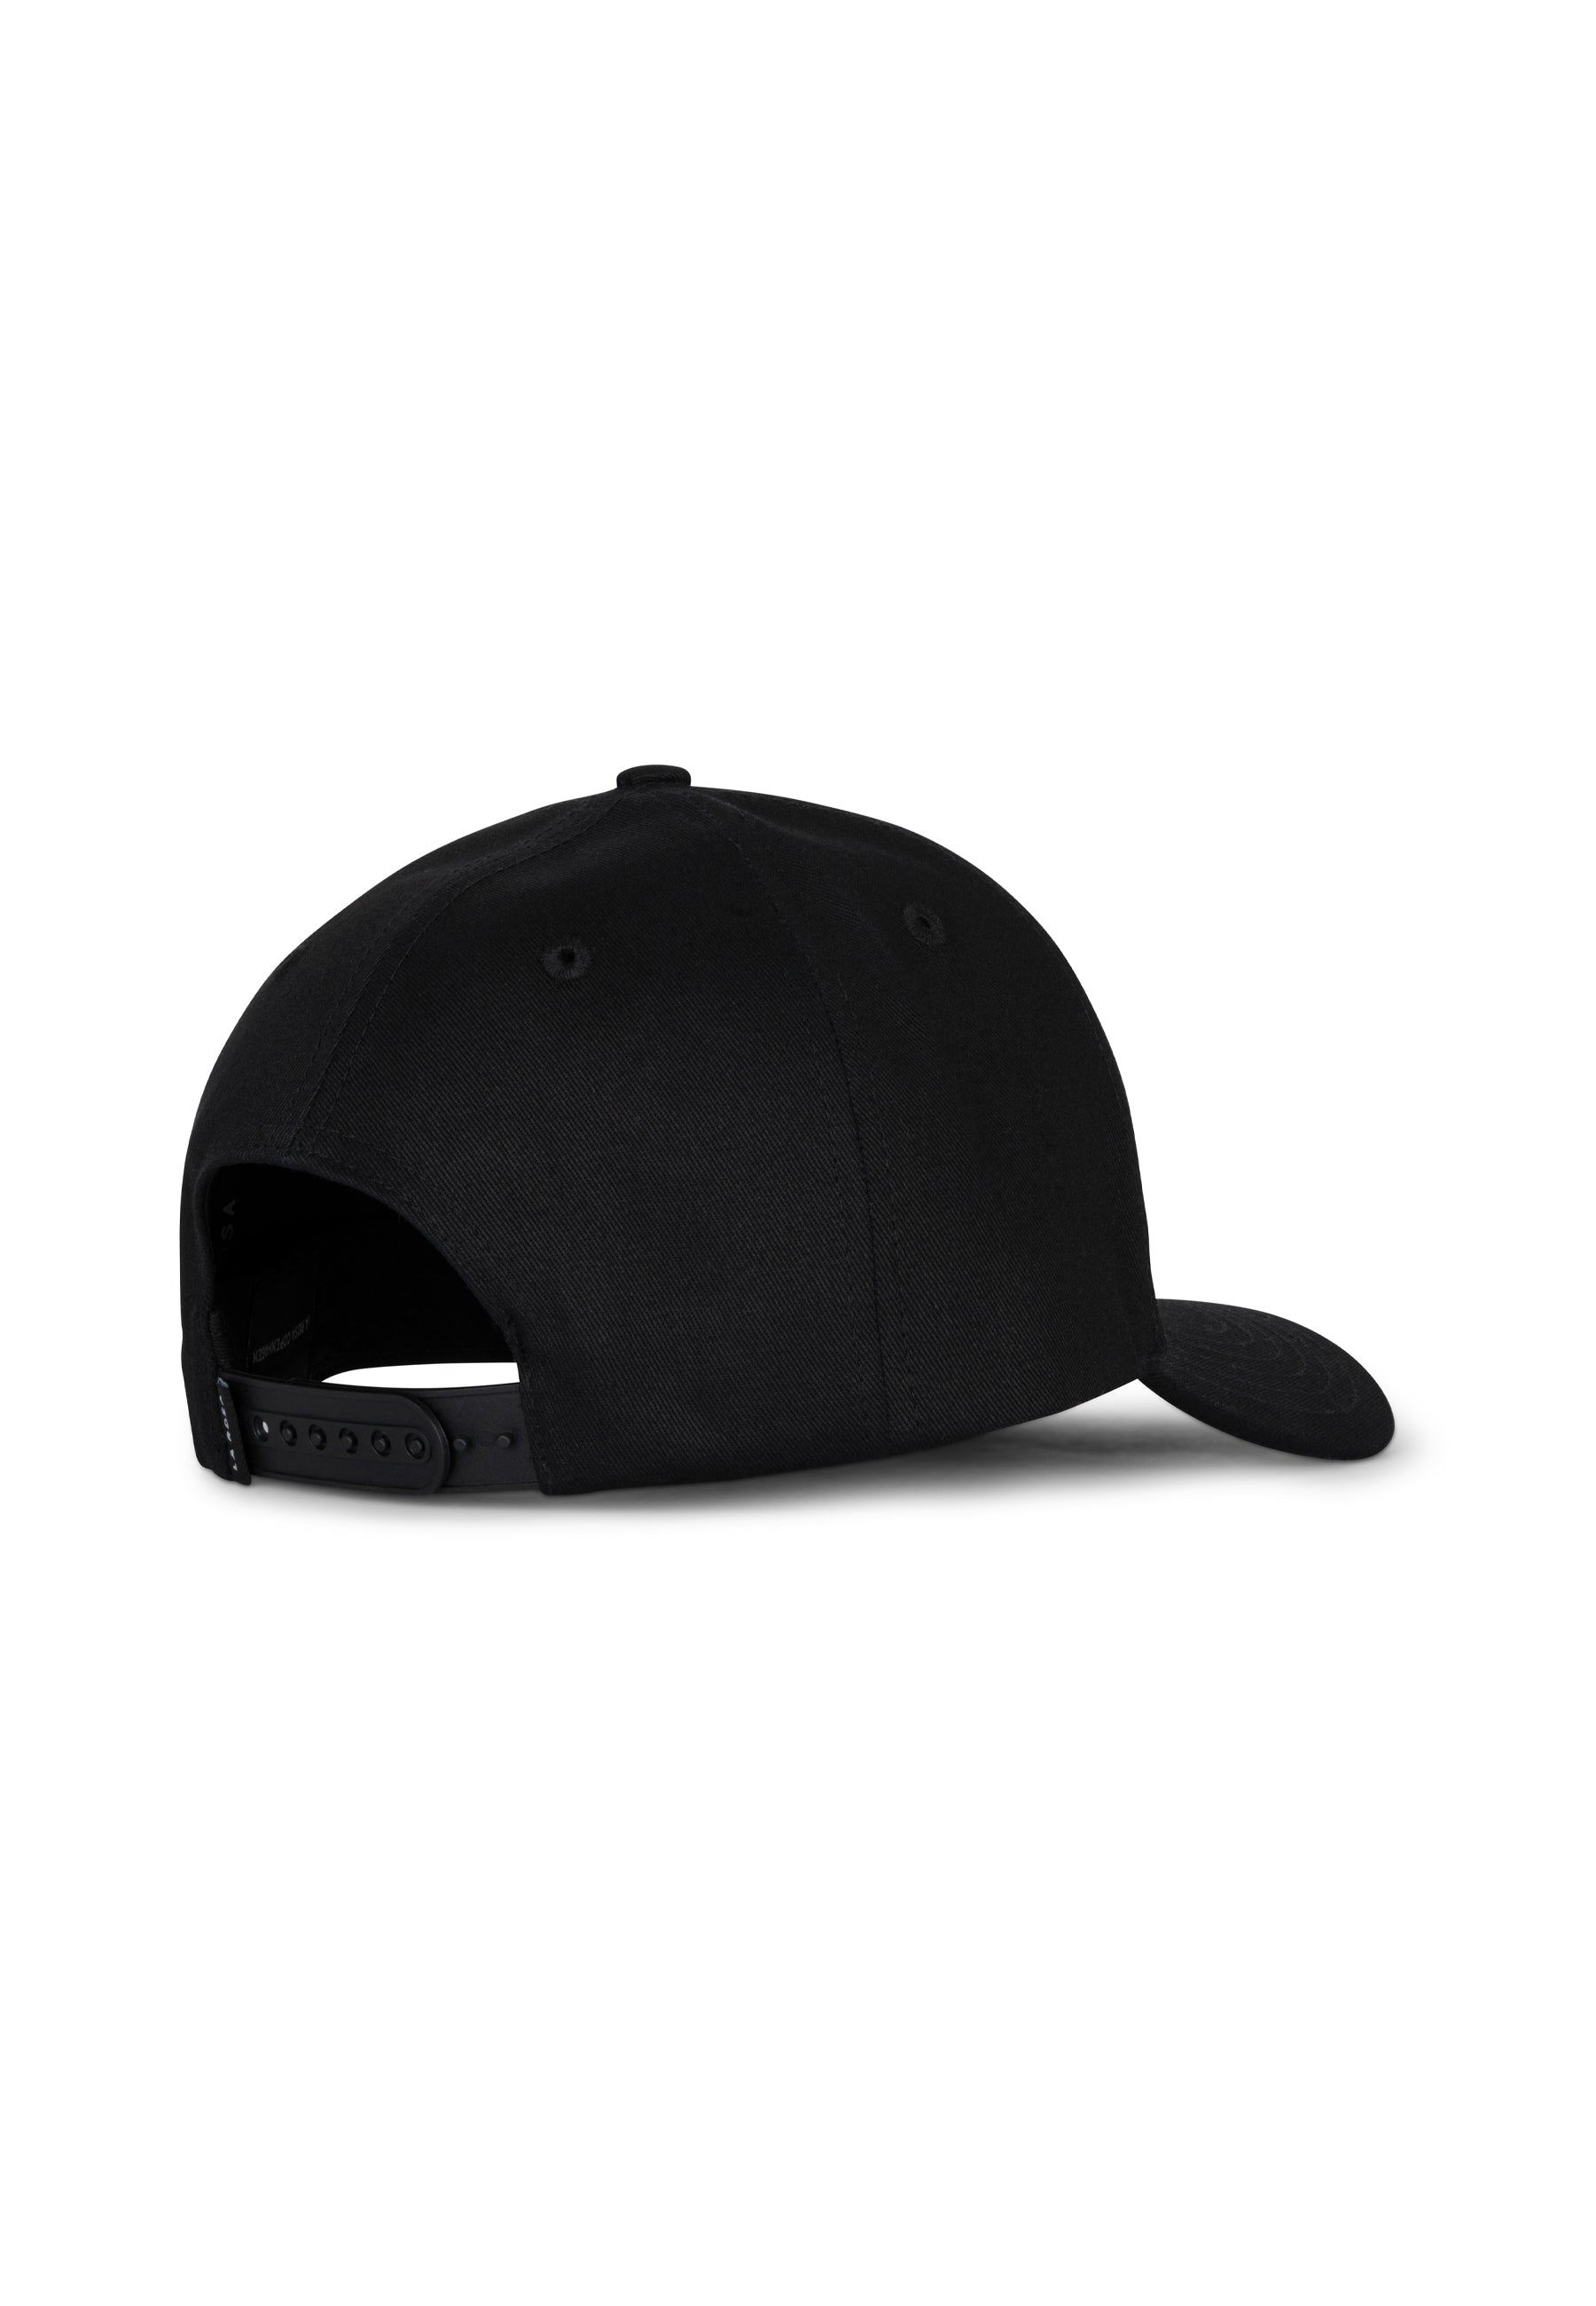 LR BASEBALL CAP - BLACK